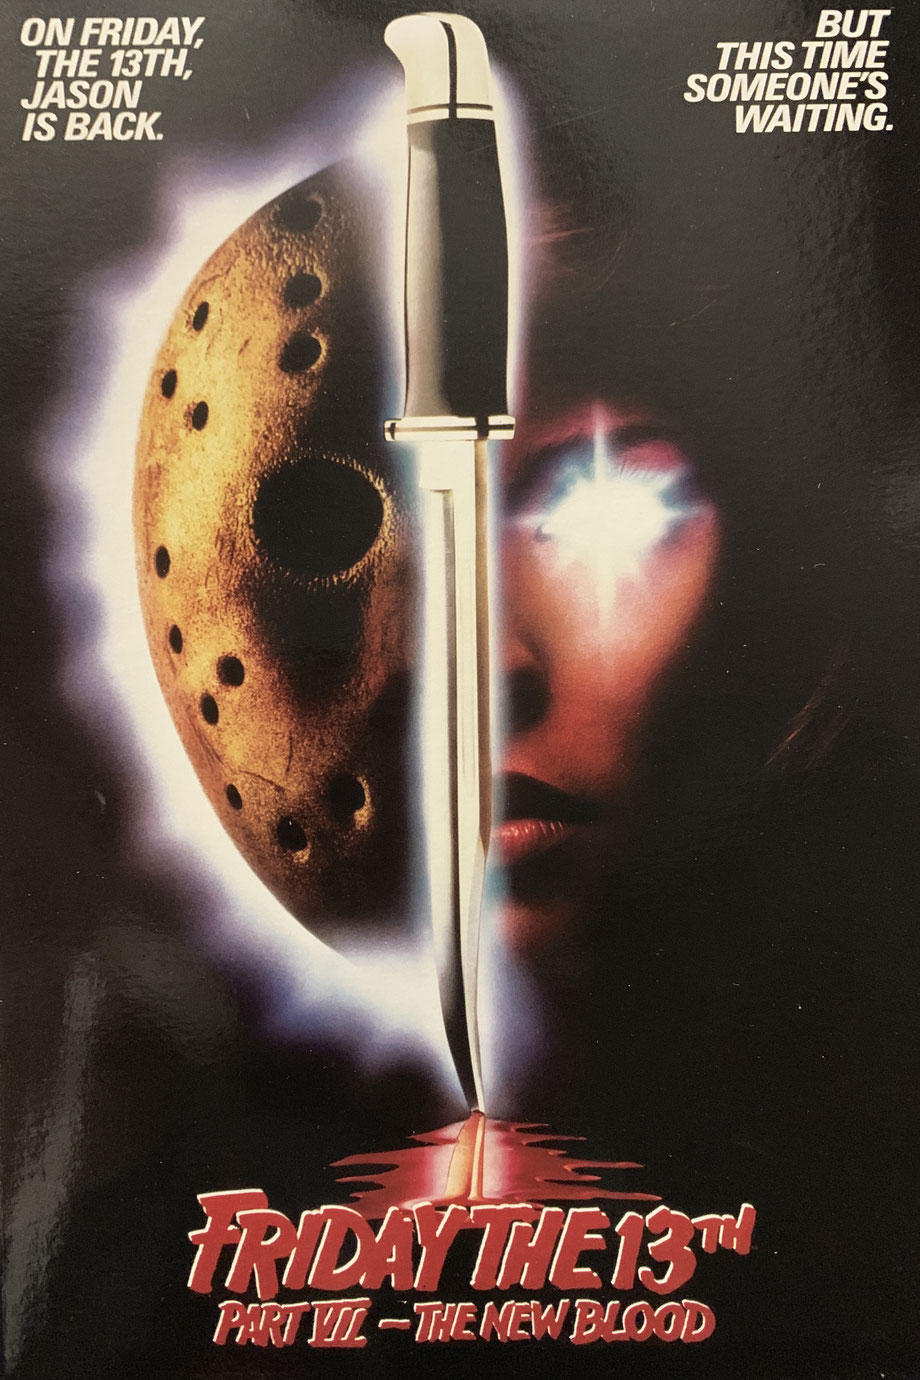 Jason Ultimate Teil 7 Freitag der 13. Horror Actionfigur 18cm Neca ovp